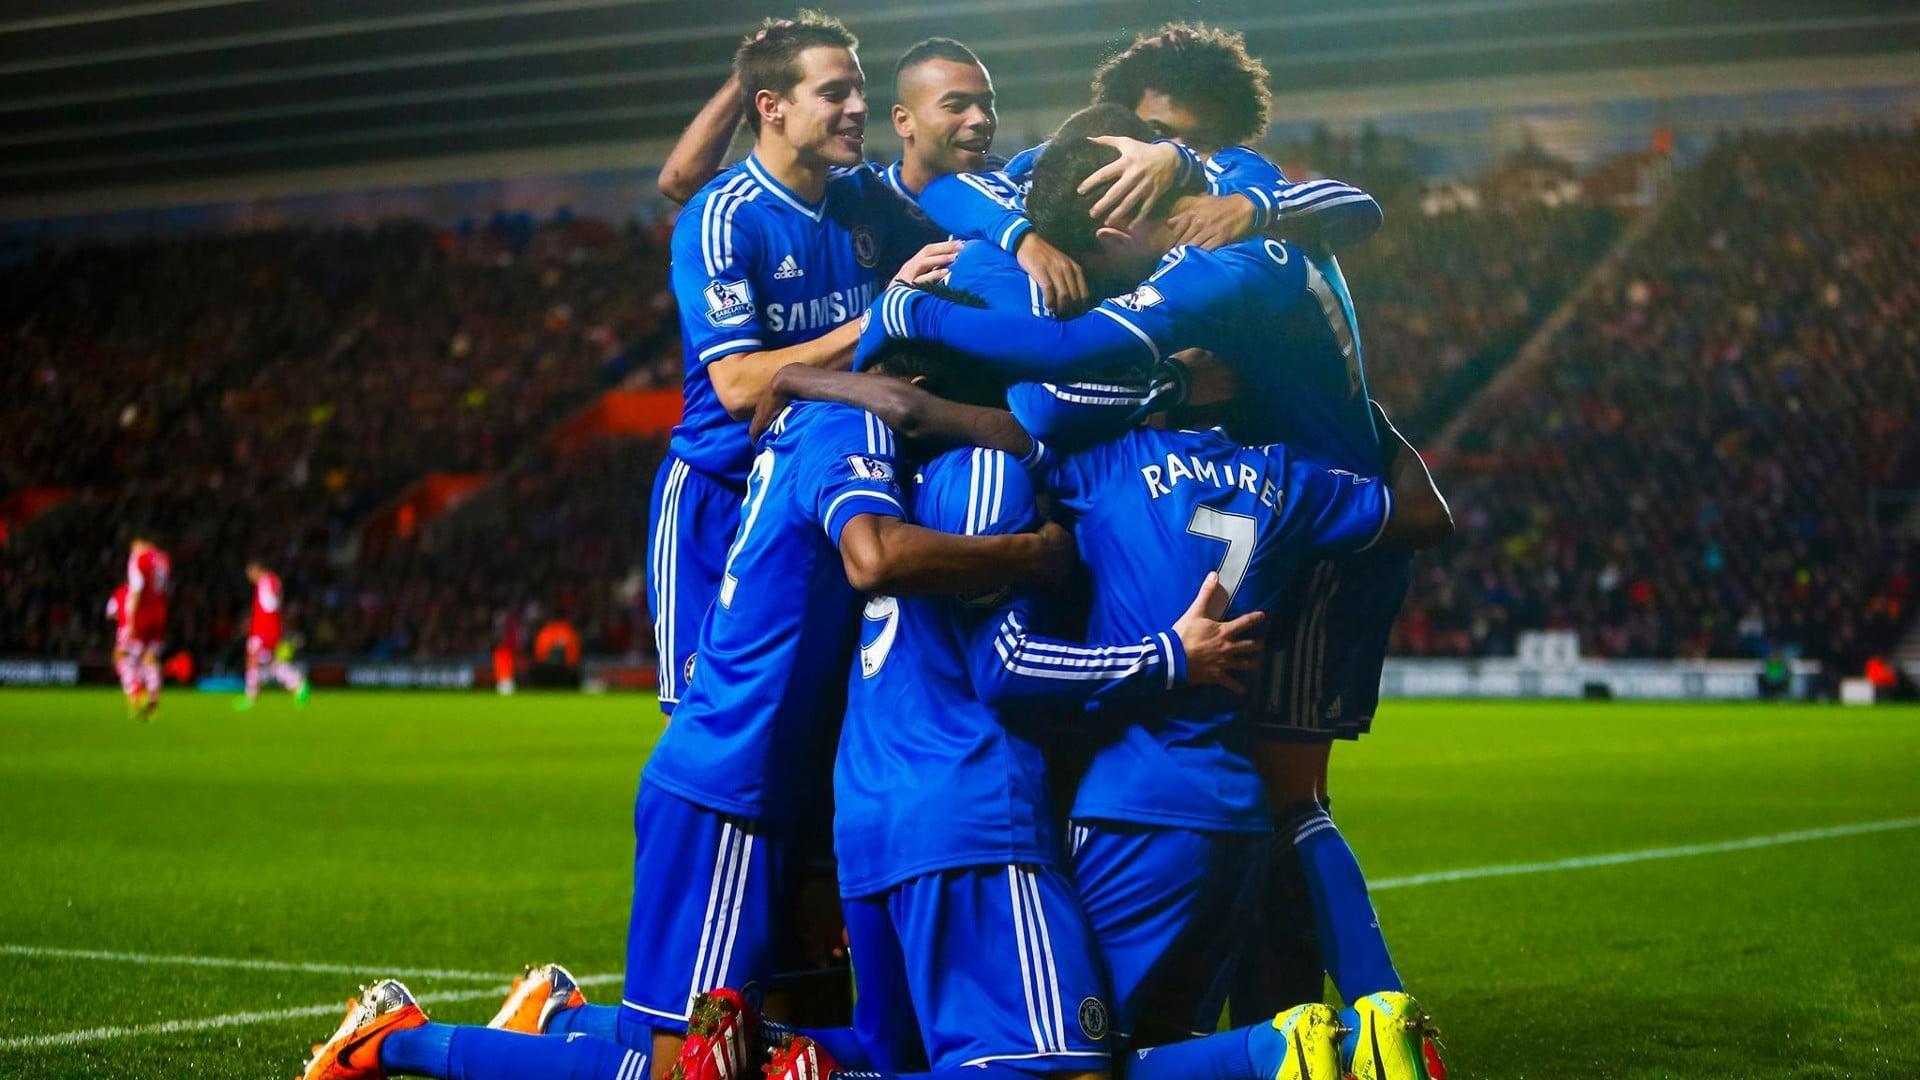 Chelsea FC - Season Review 2013/14 backdrop